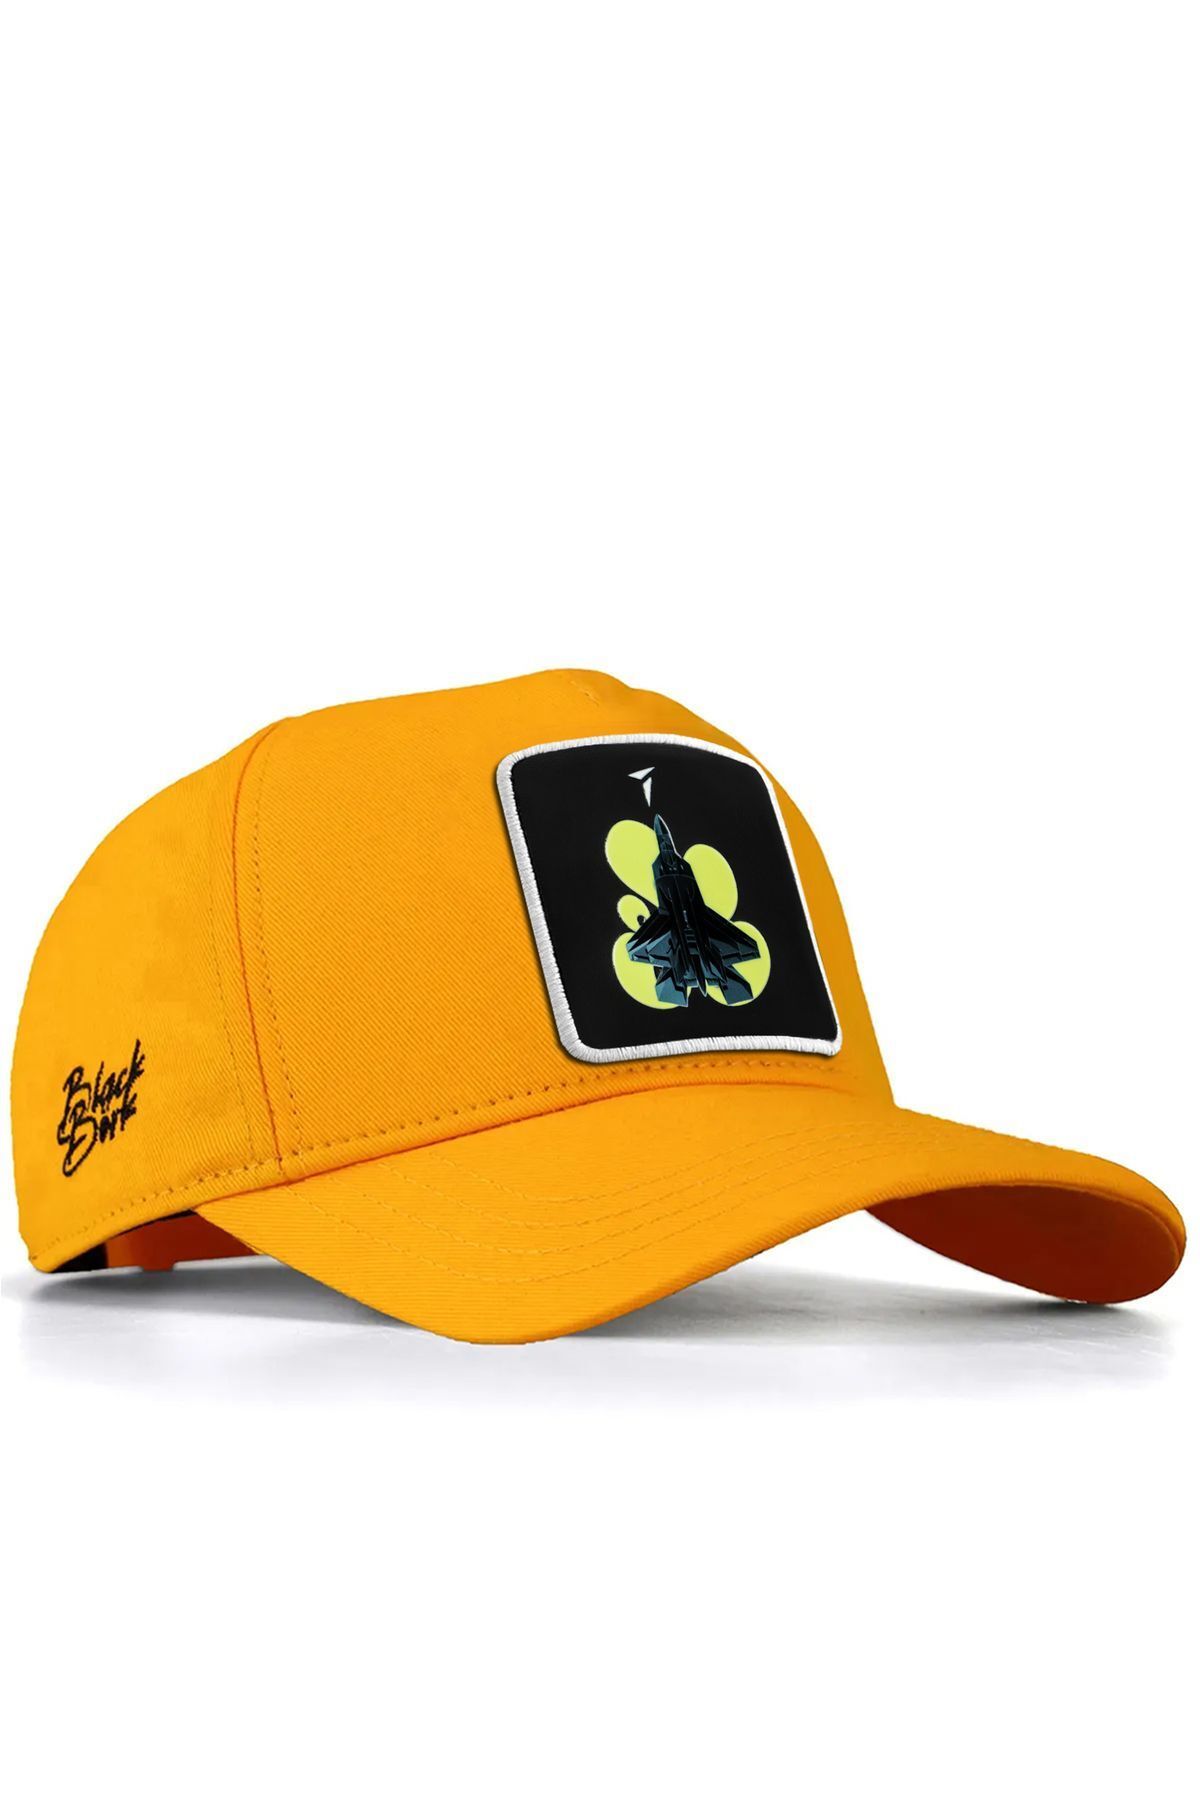 BlackBörk V1 Baseball Manevra Kaan Lisanlı Sarı Şapka